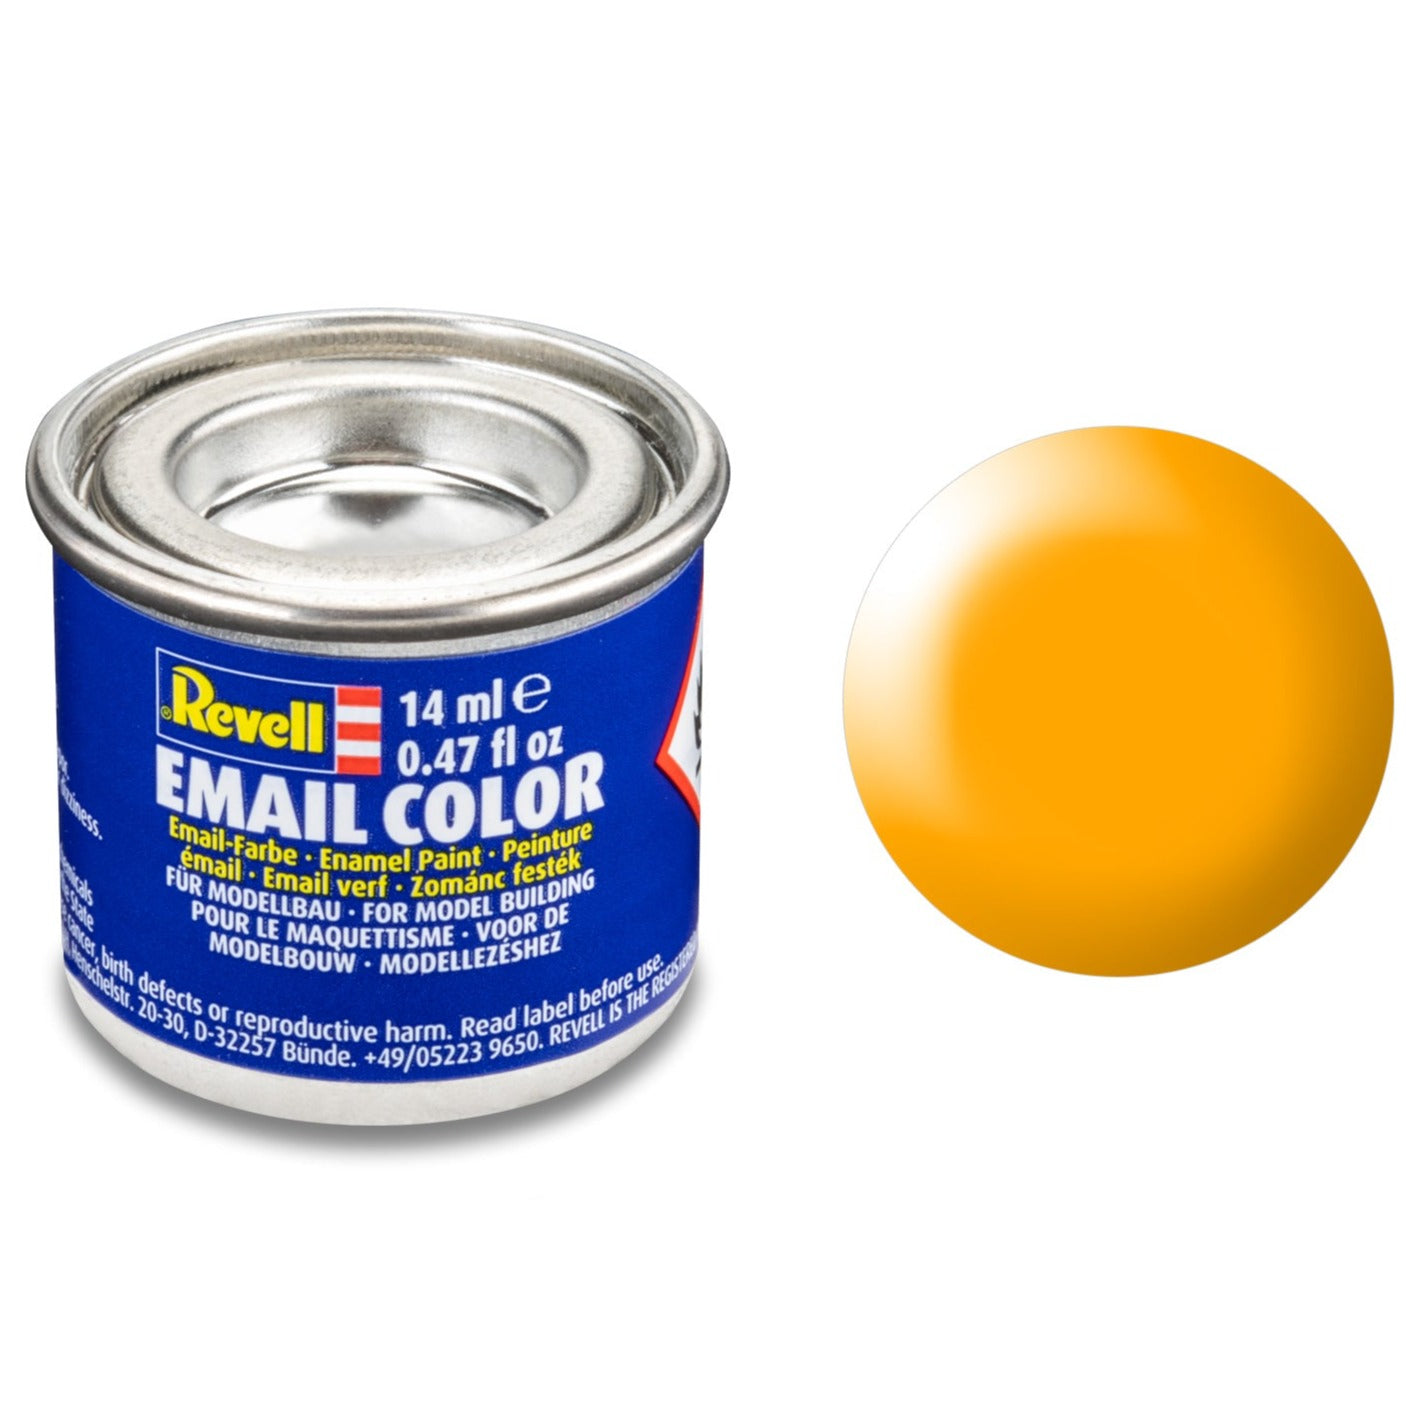 Revell Silk "Lufthansa-Yellow" (RAL 1028) Enamel Paint - 14ml - 32310 - Loaded Dice Barry Vale of Glamorgan CF64 3HD